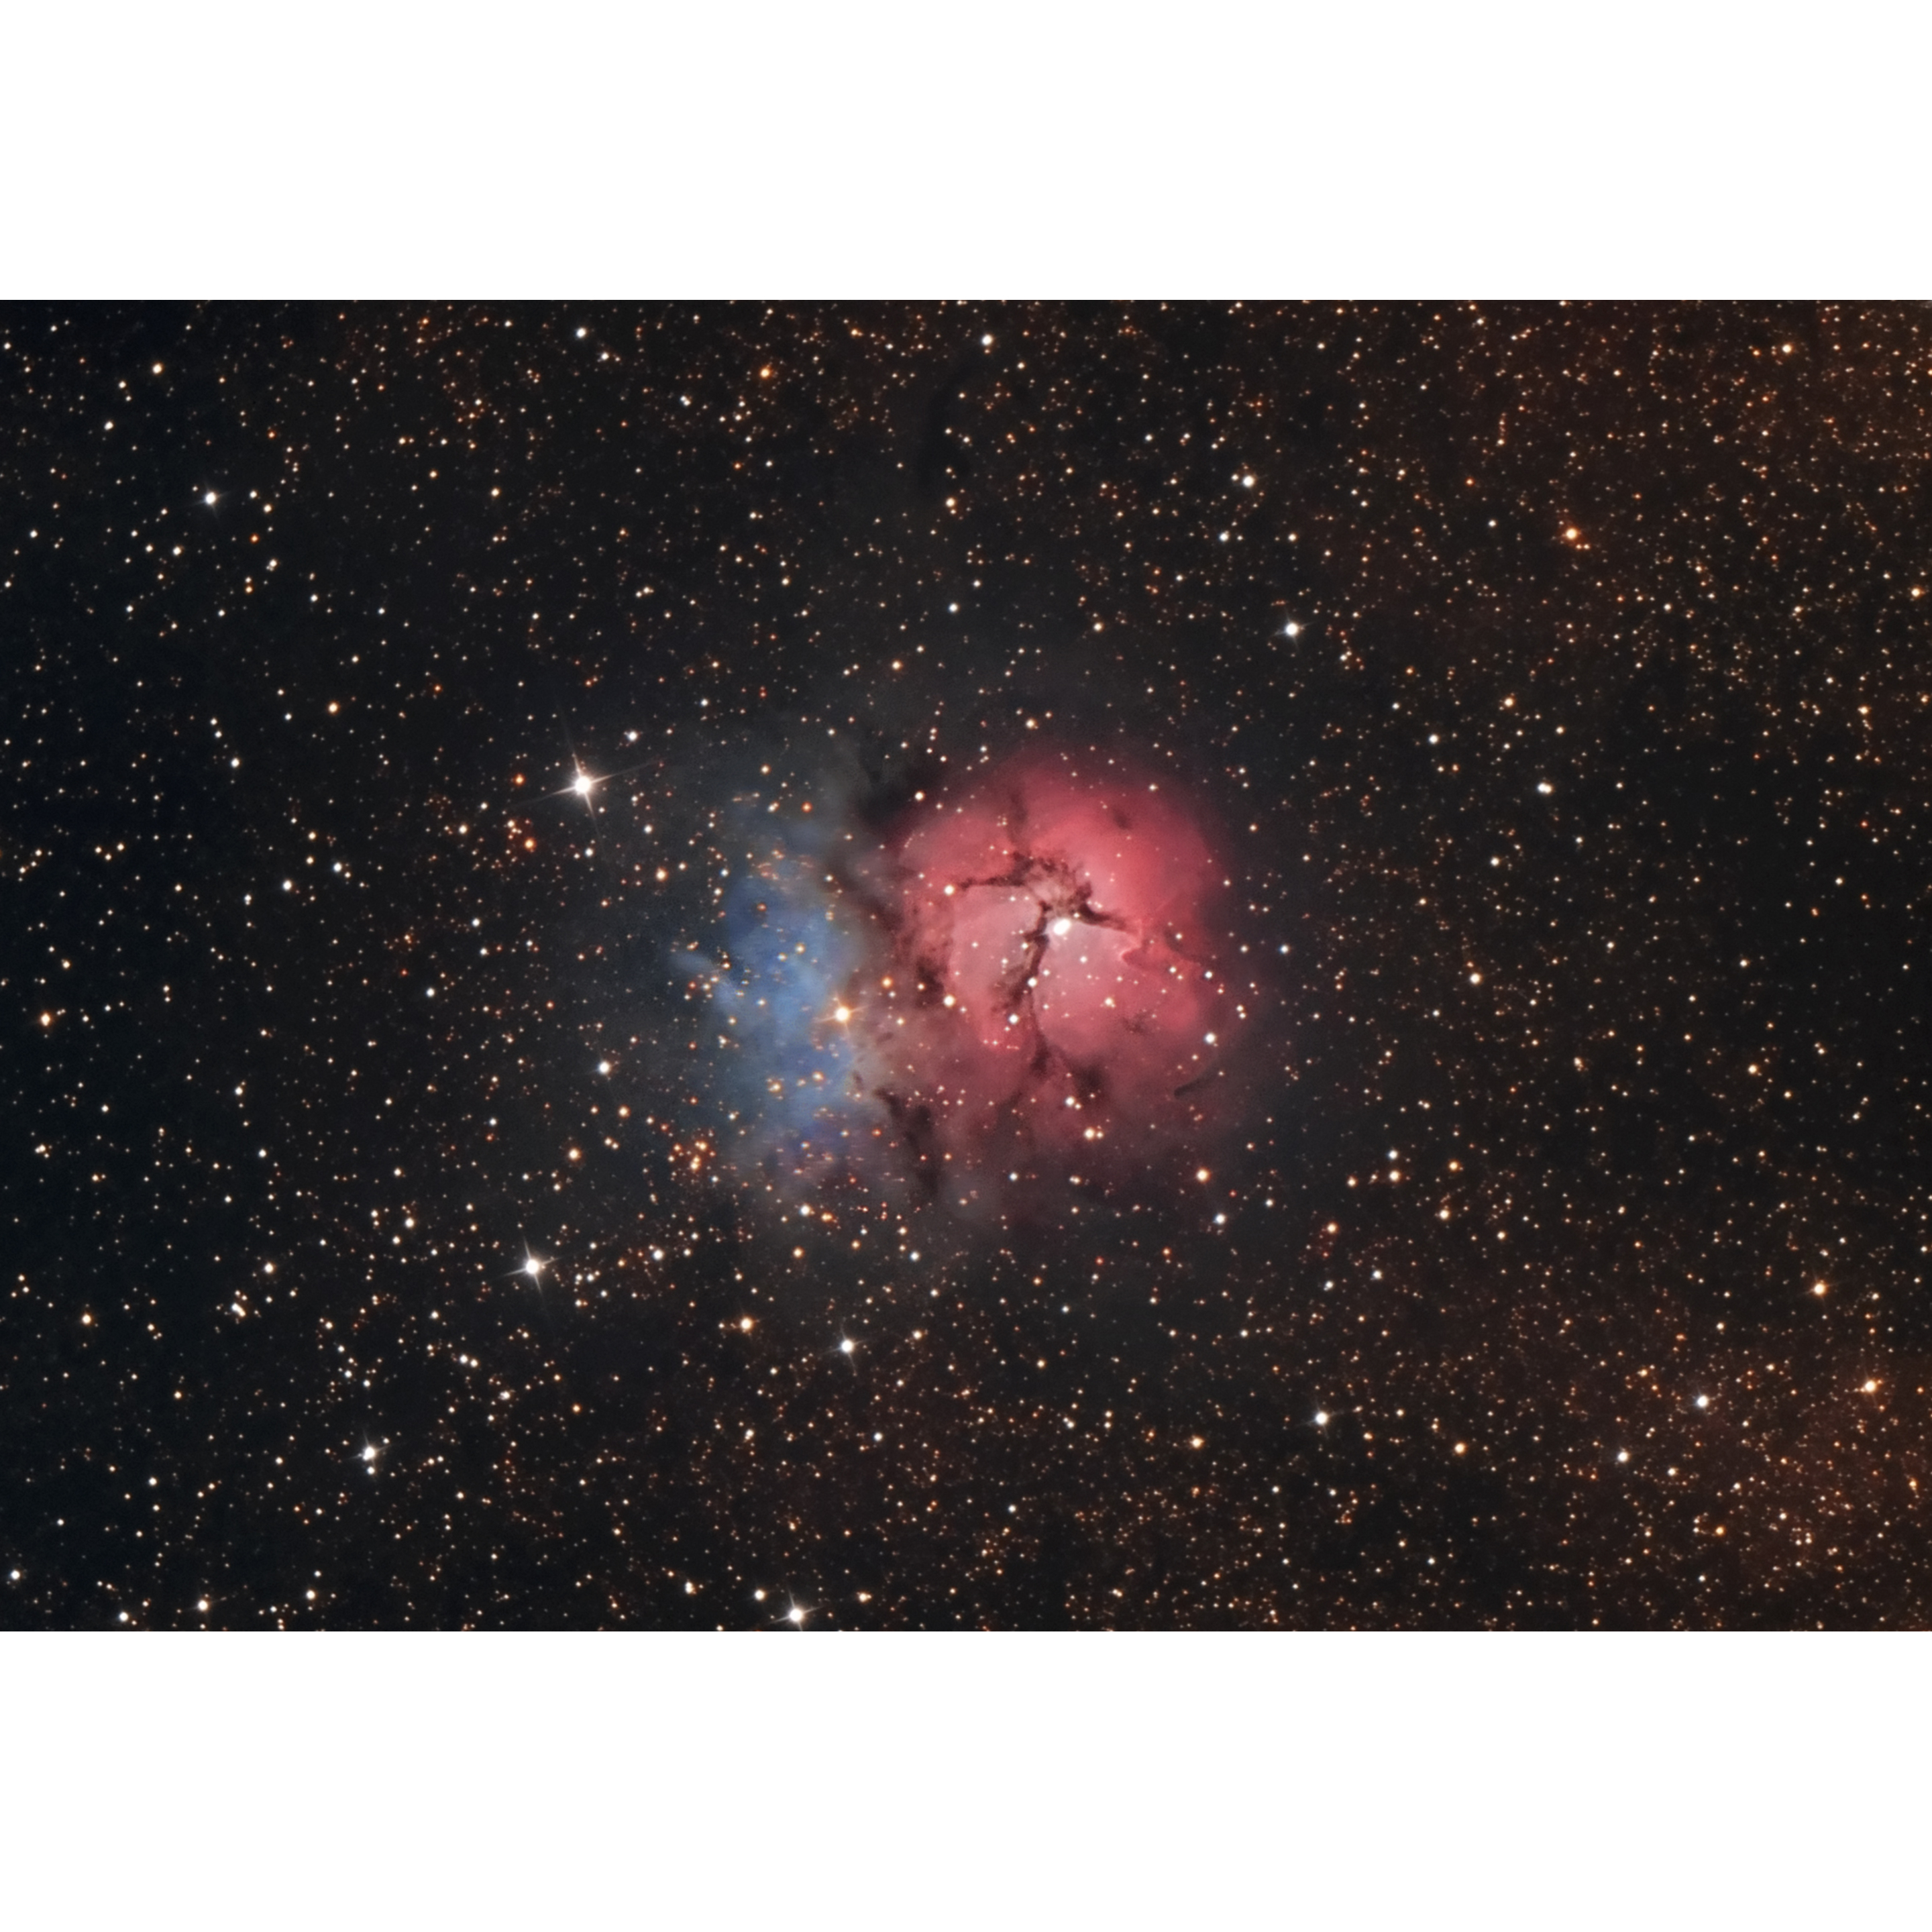 Tubo Óptico Bresser Messier Nt203s/800